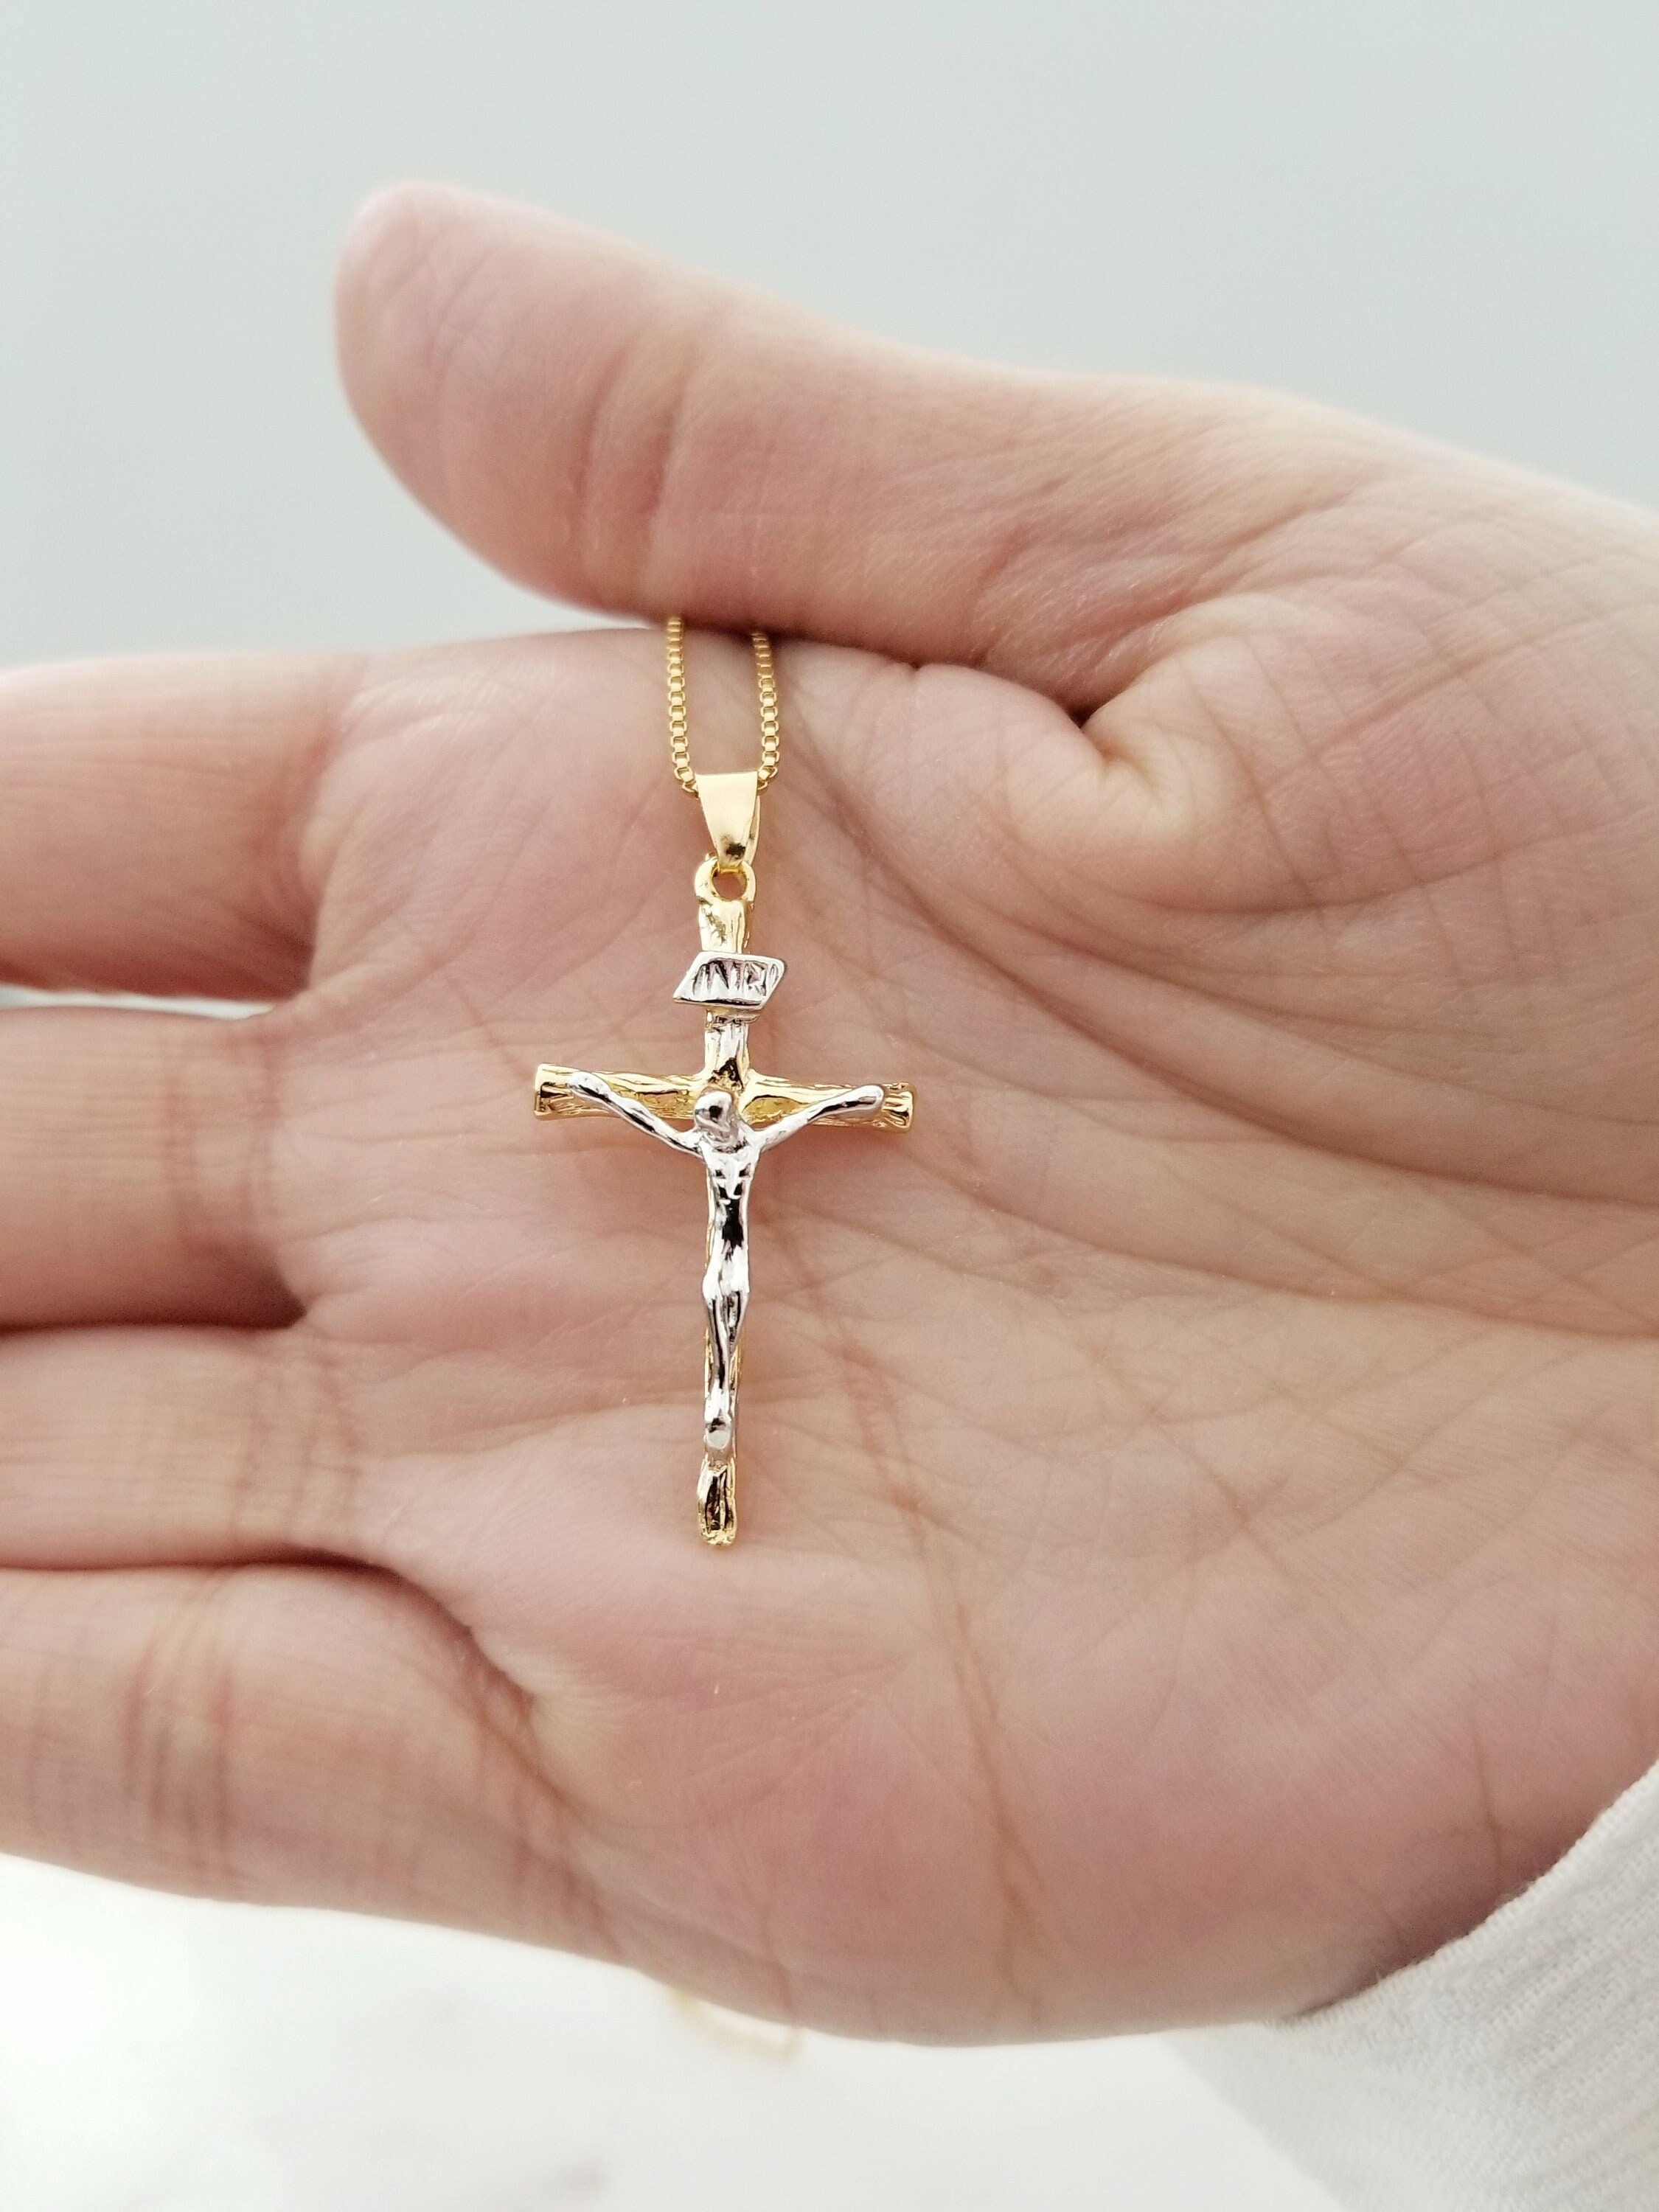 20 Pack Jesus Catholic Diy Jewelry Making Accessories Cross Charm